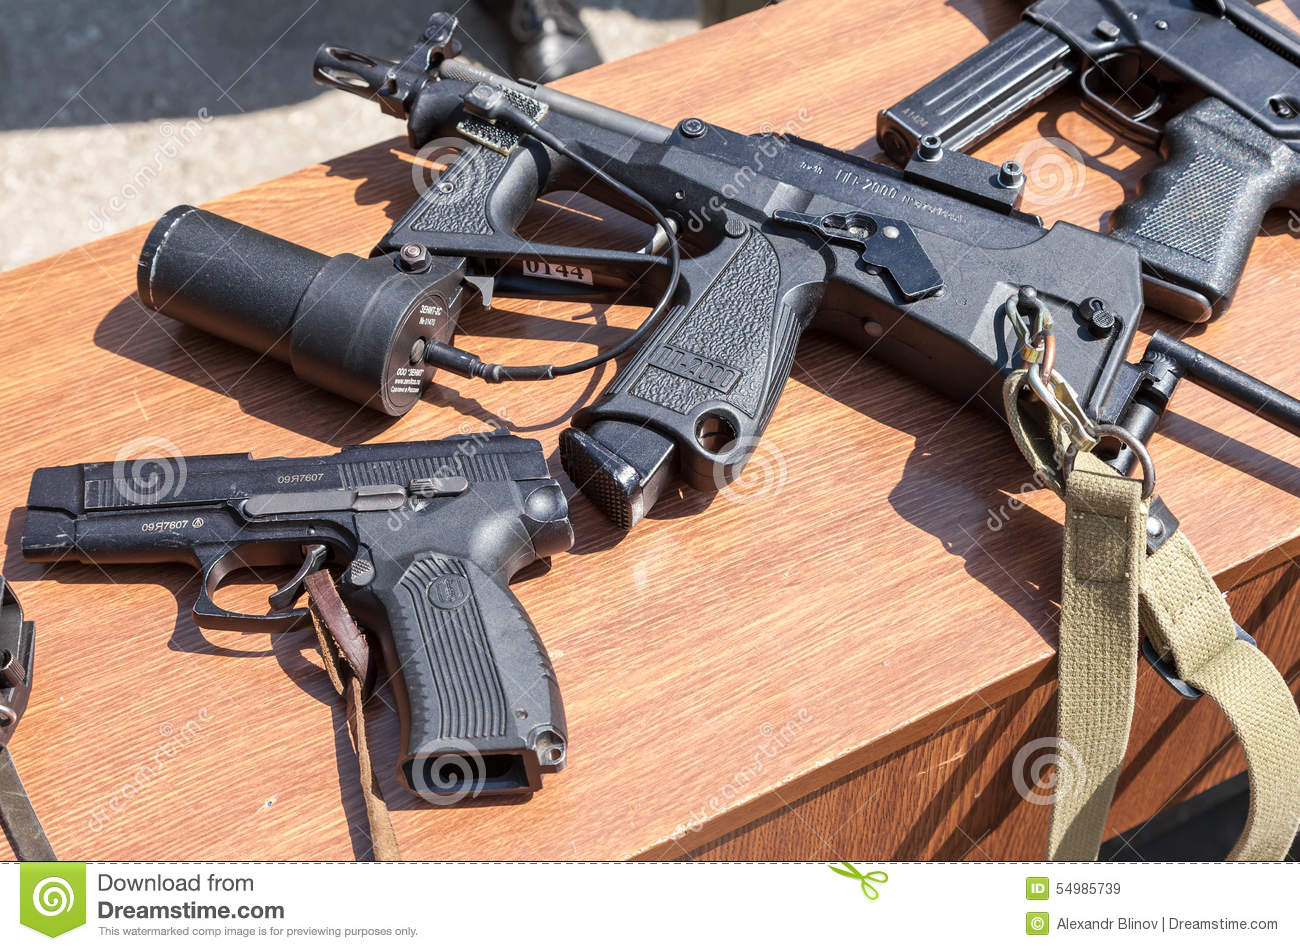 русские оружия фото